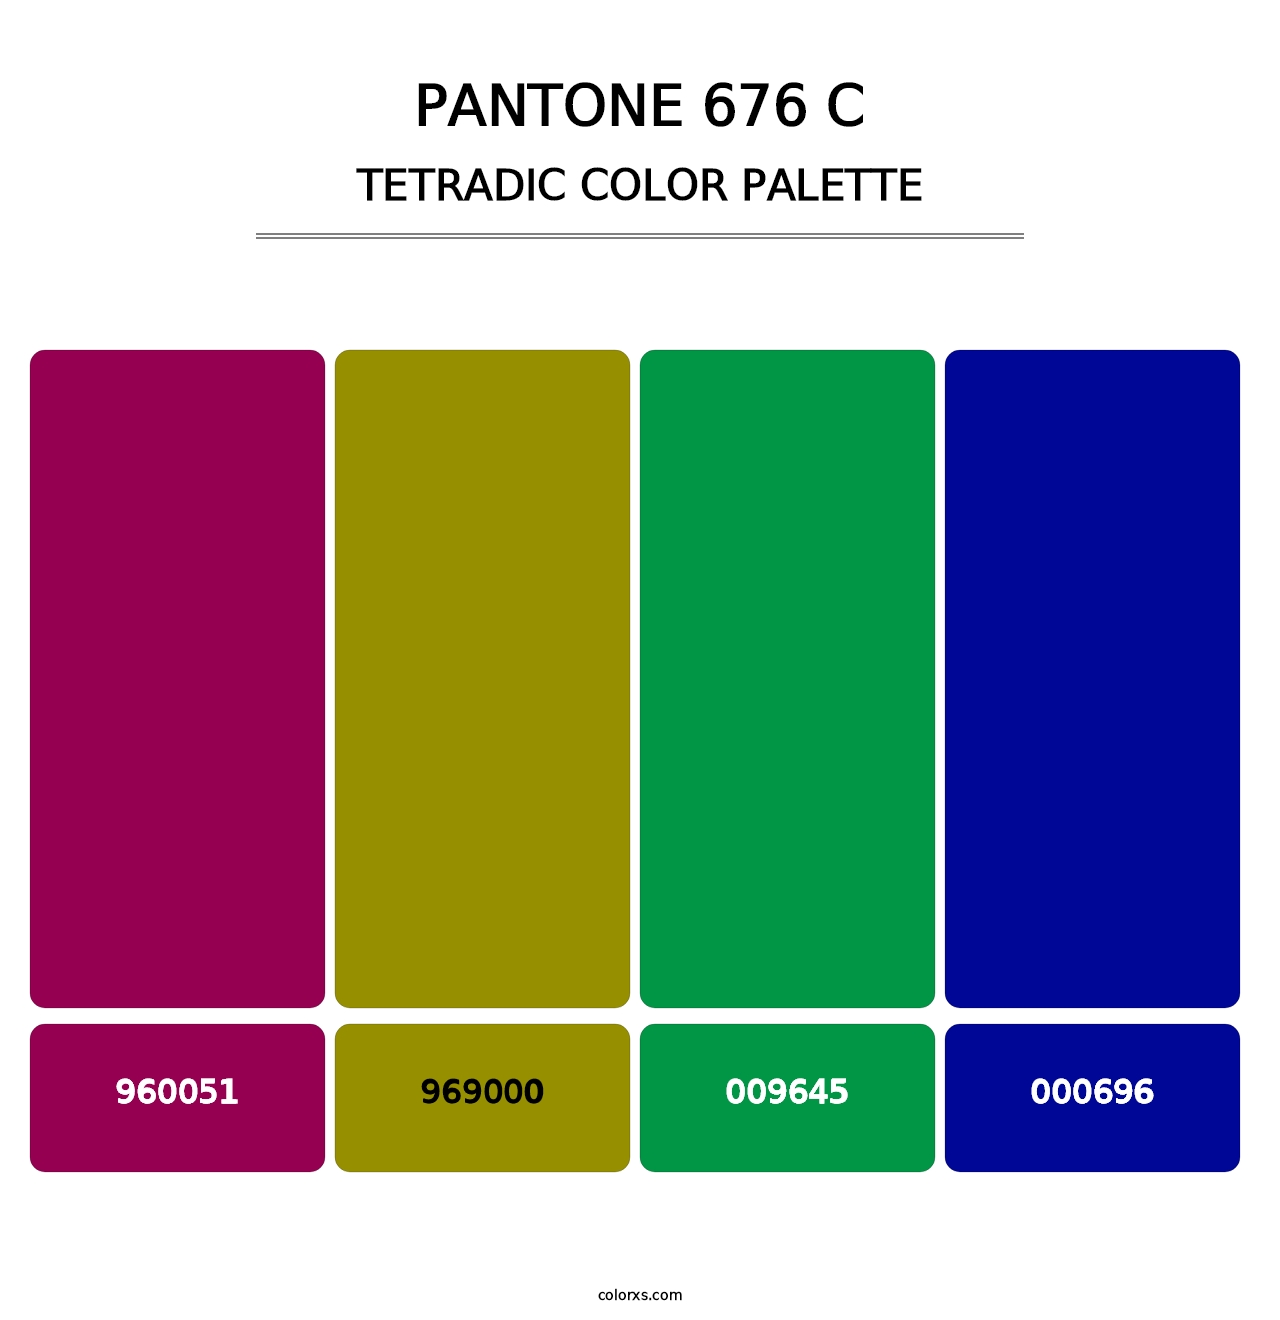 PANTONE 676 C - Tetradic Color Palette